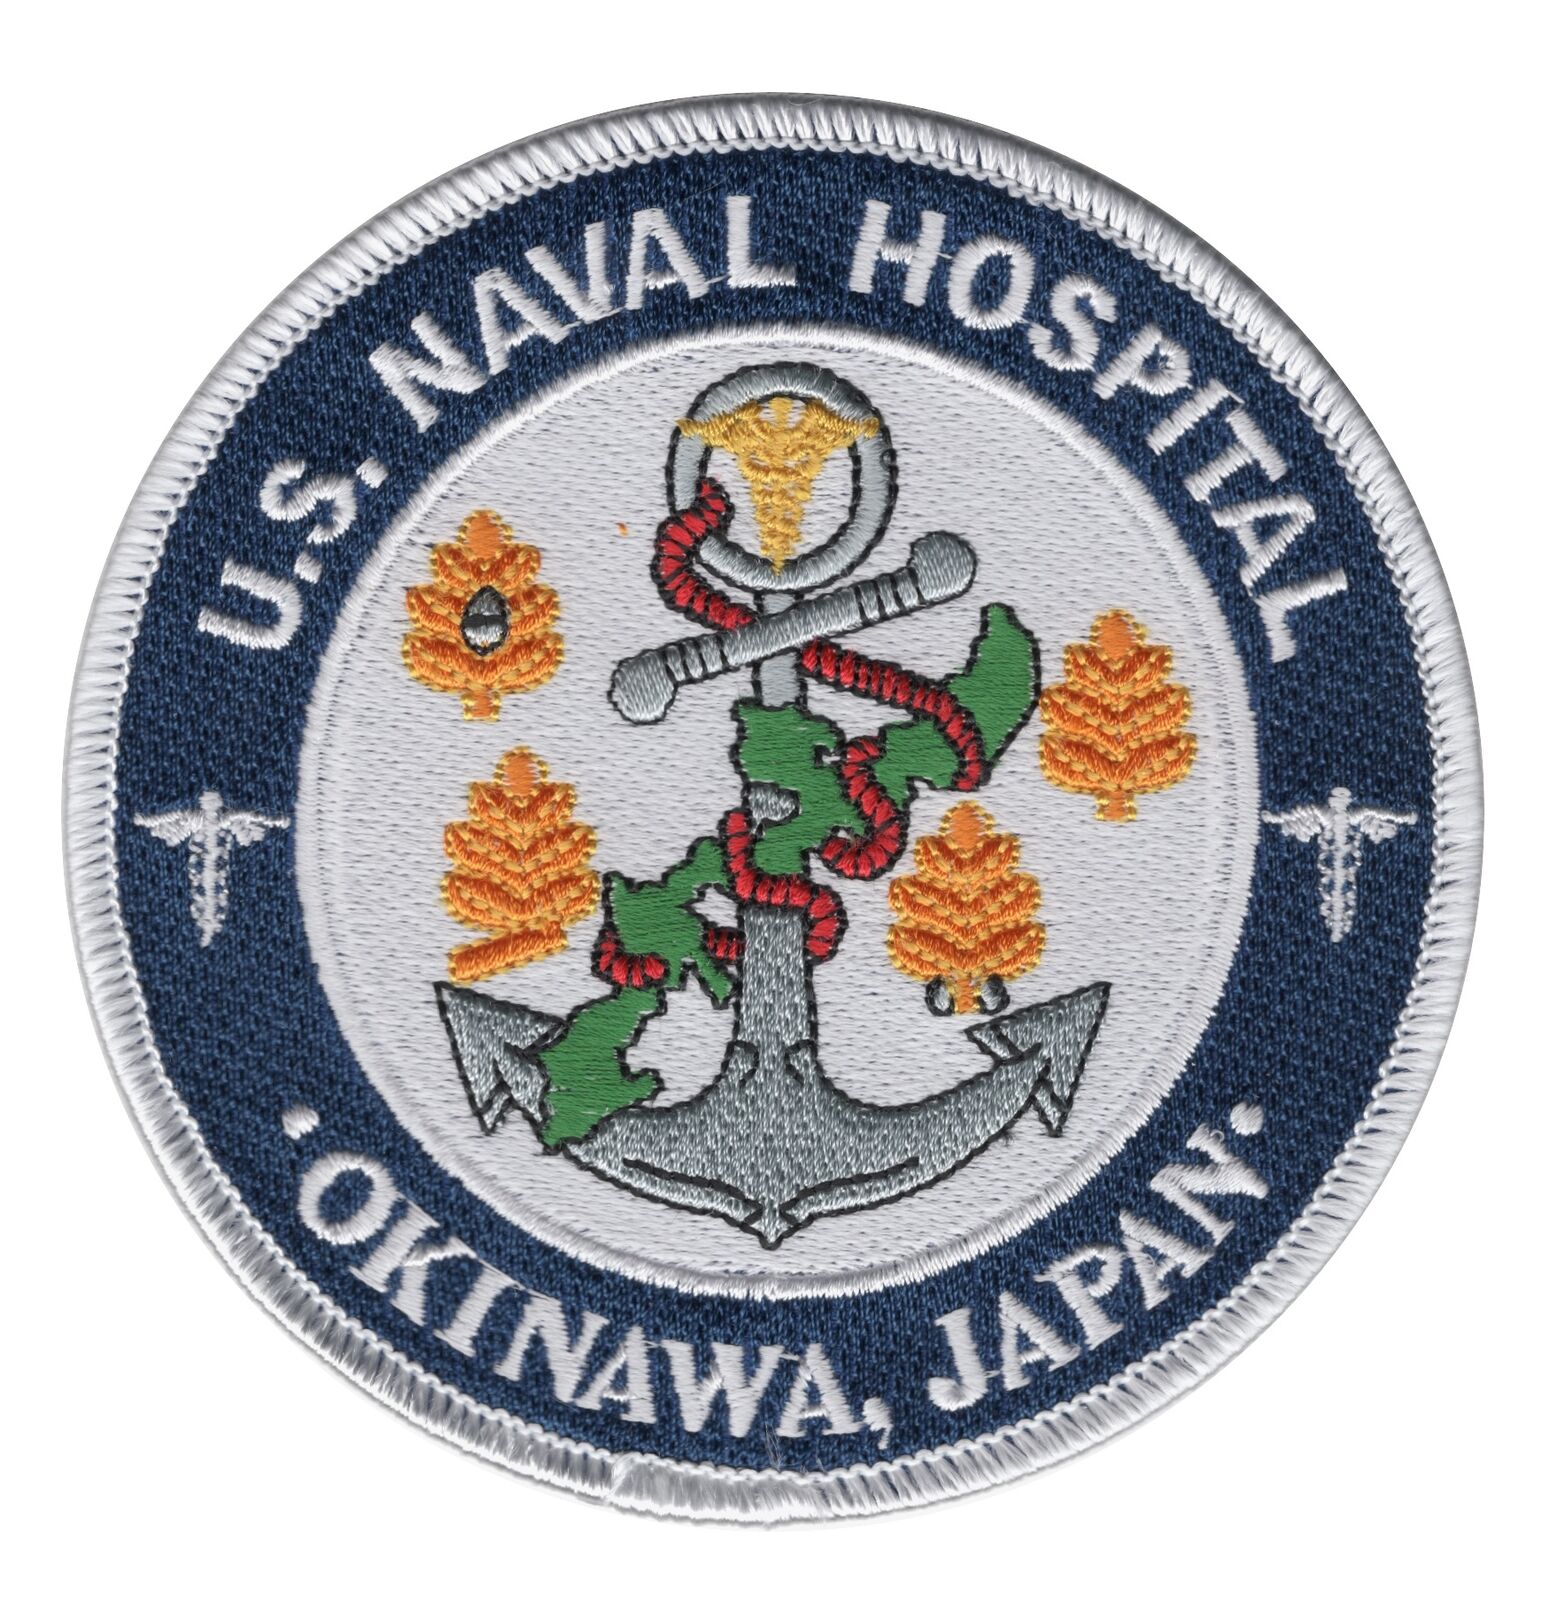 U.S. Naval Hospital Okinawa, Japan Patch